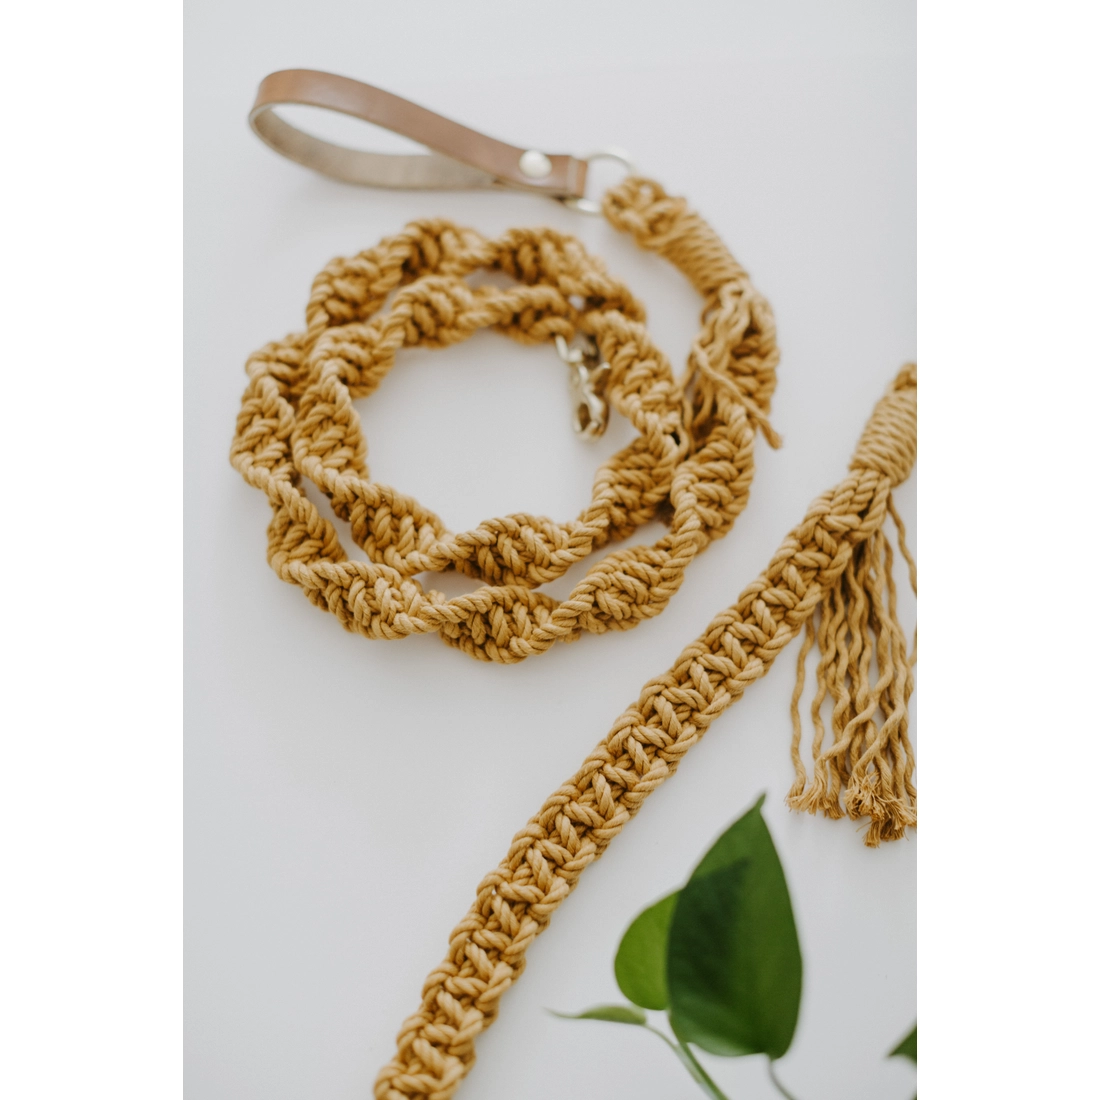 Macrame Dog Leash - Mustard Rope / Brown Leather Handle